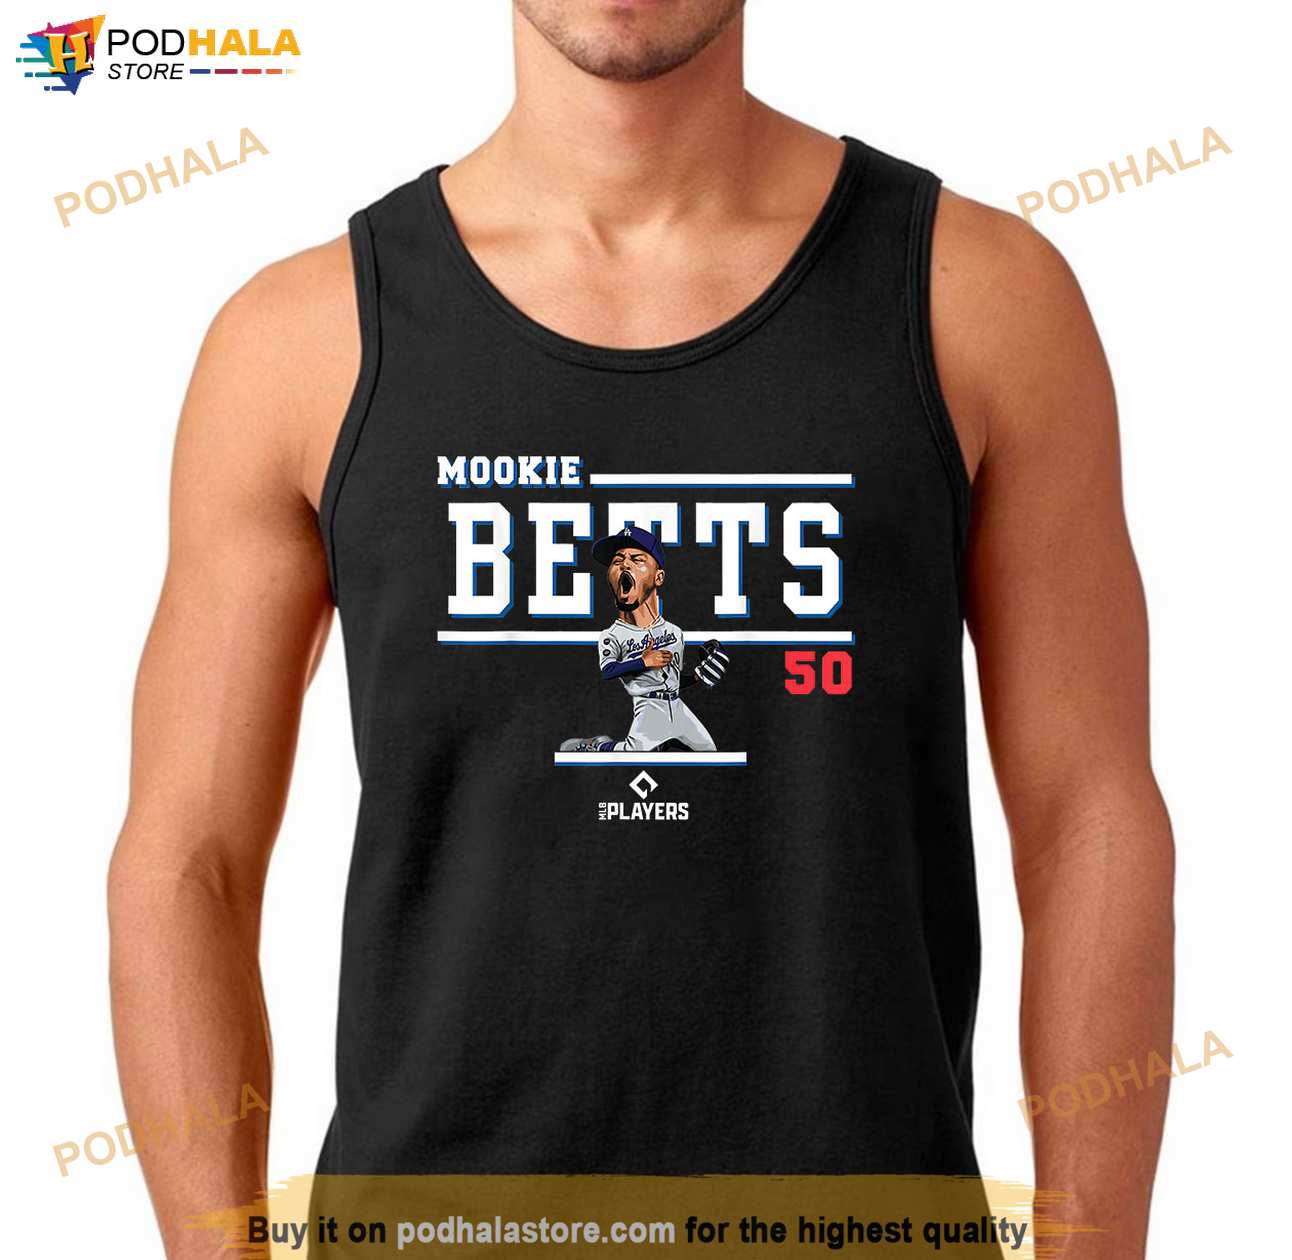 MLBPA Major League Baseball Mookie Betts MLBMOK2014 Shirt - Bring